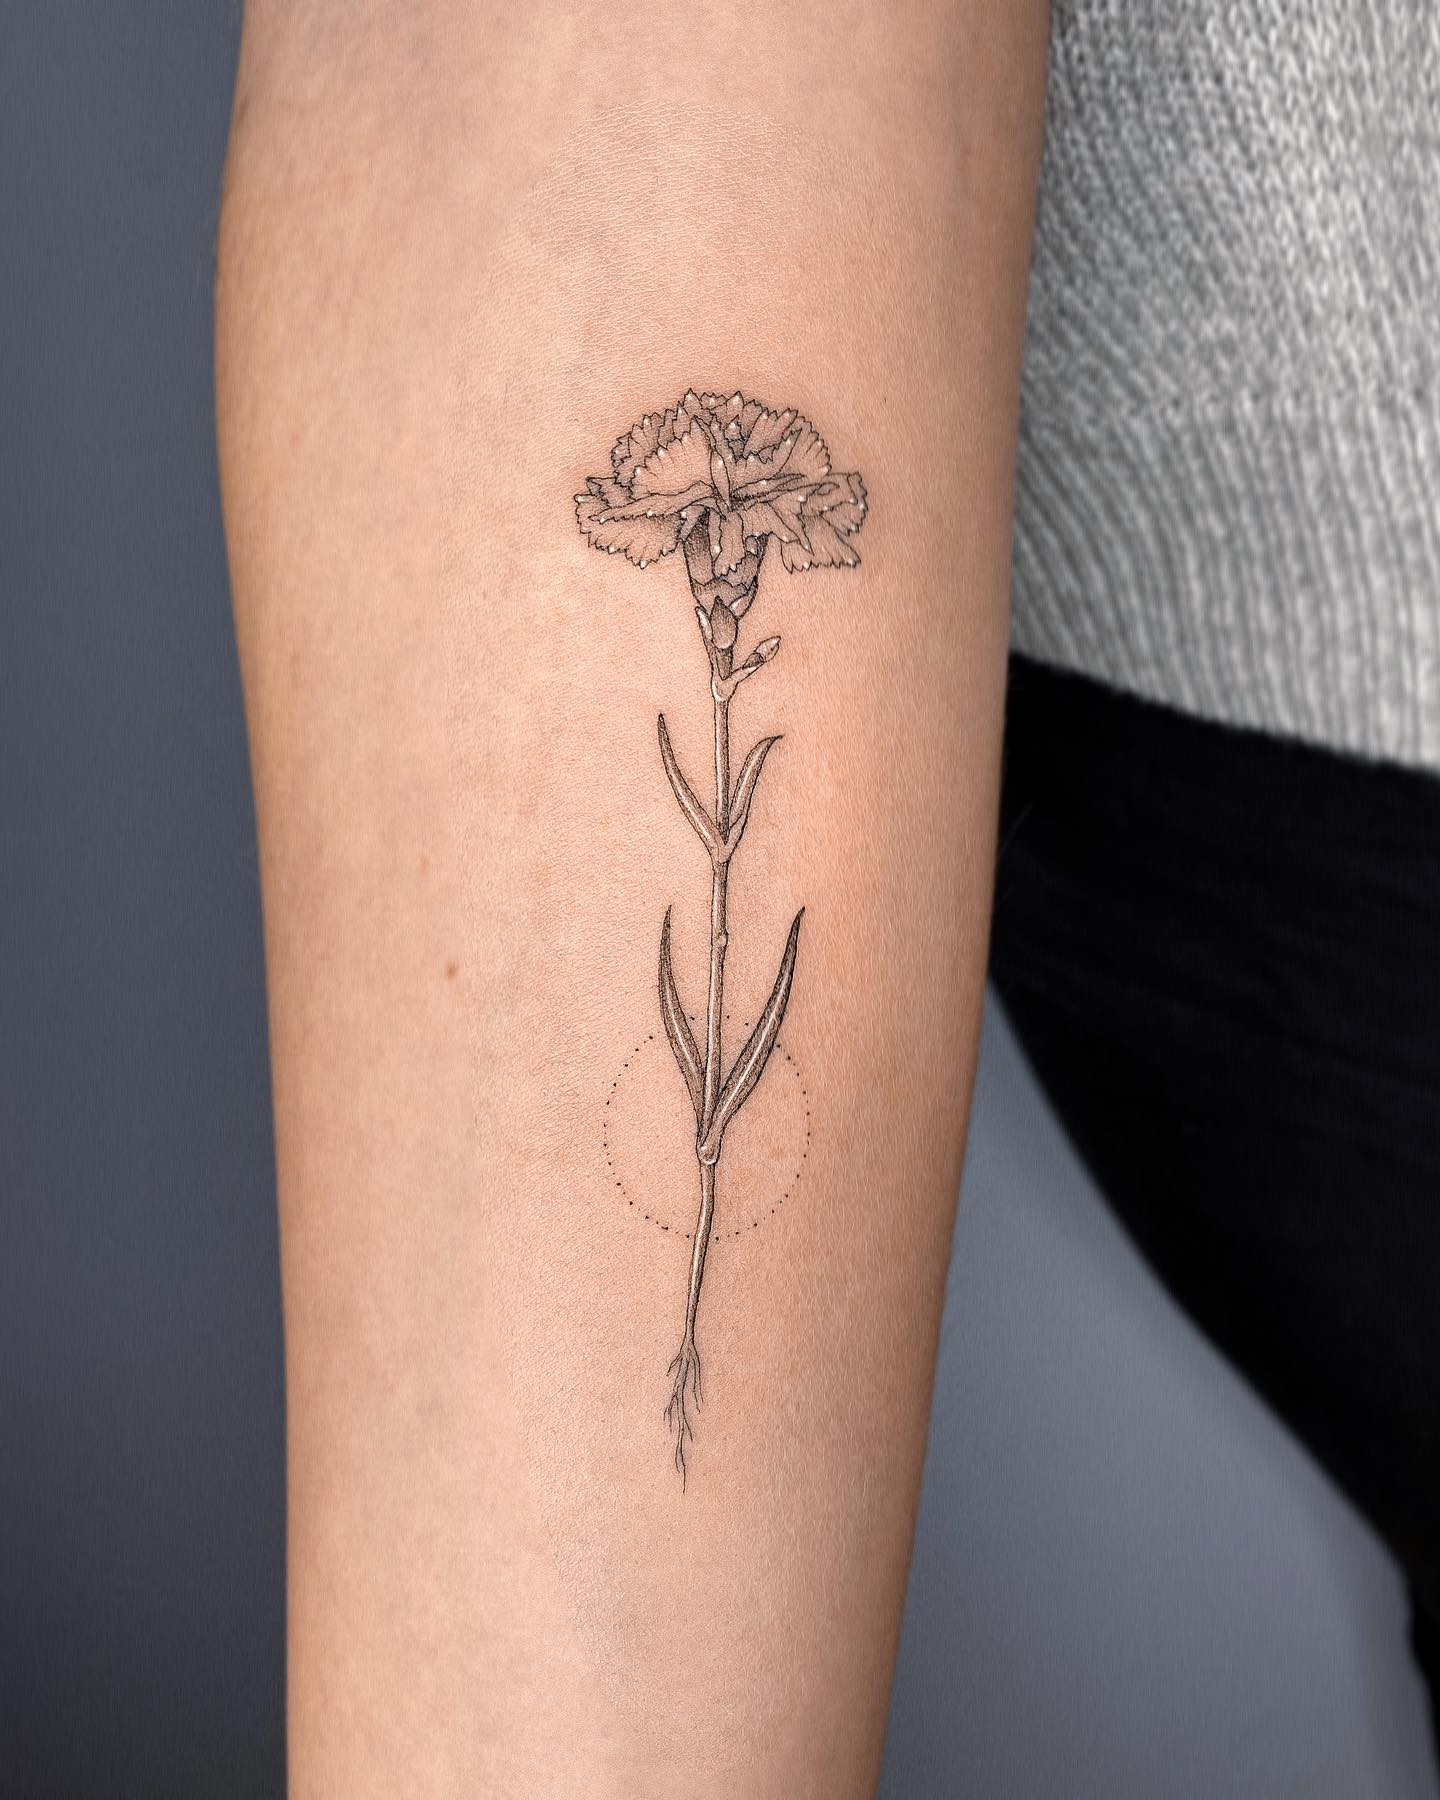 Tatuaje de flor de clavel bien hecho.